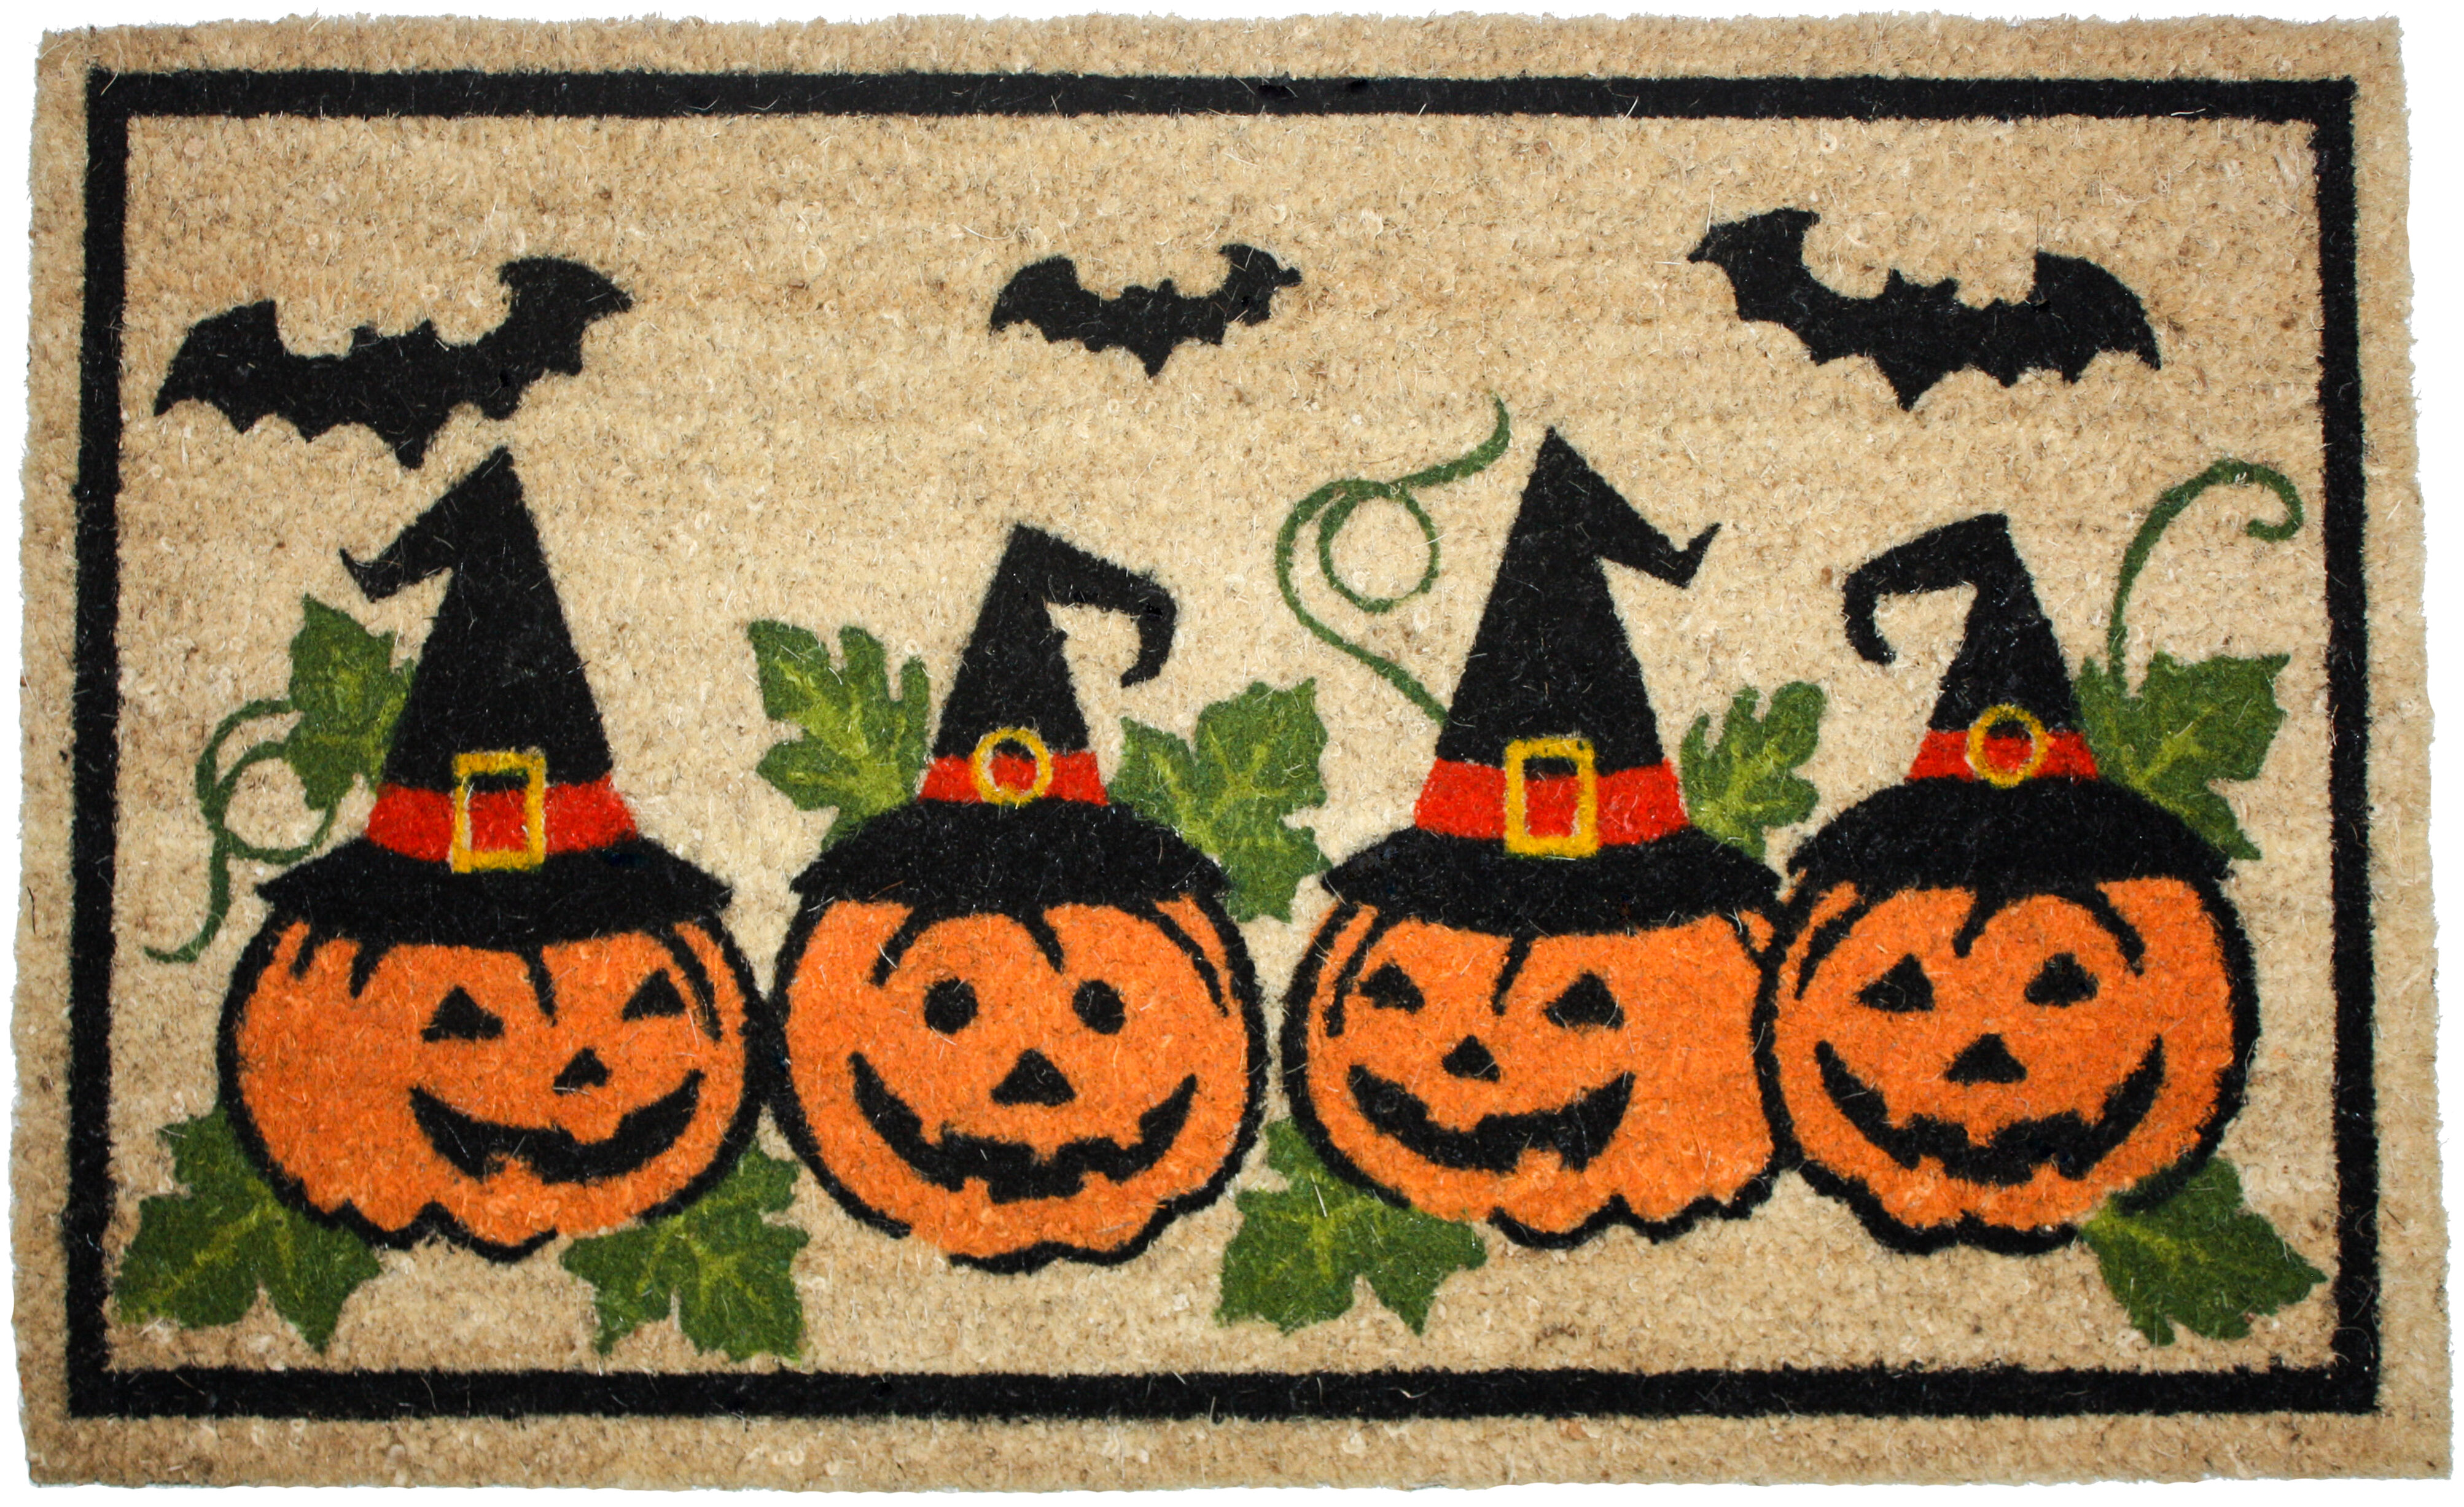 J&M Home Fashions Halloween Row of Pumpkins Doormat & Reviews | Wayfair